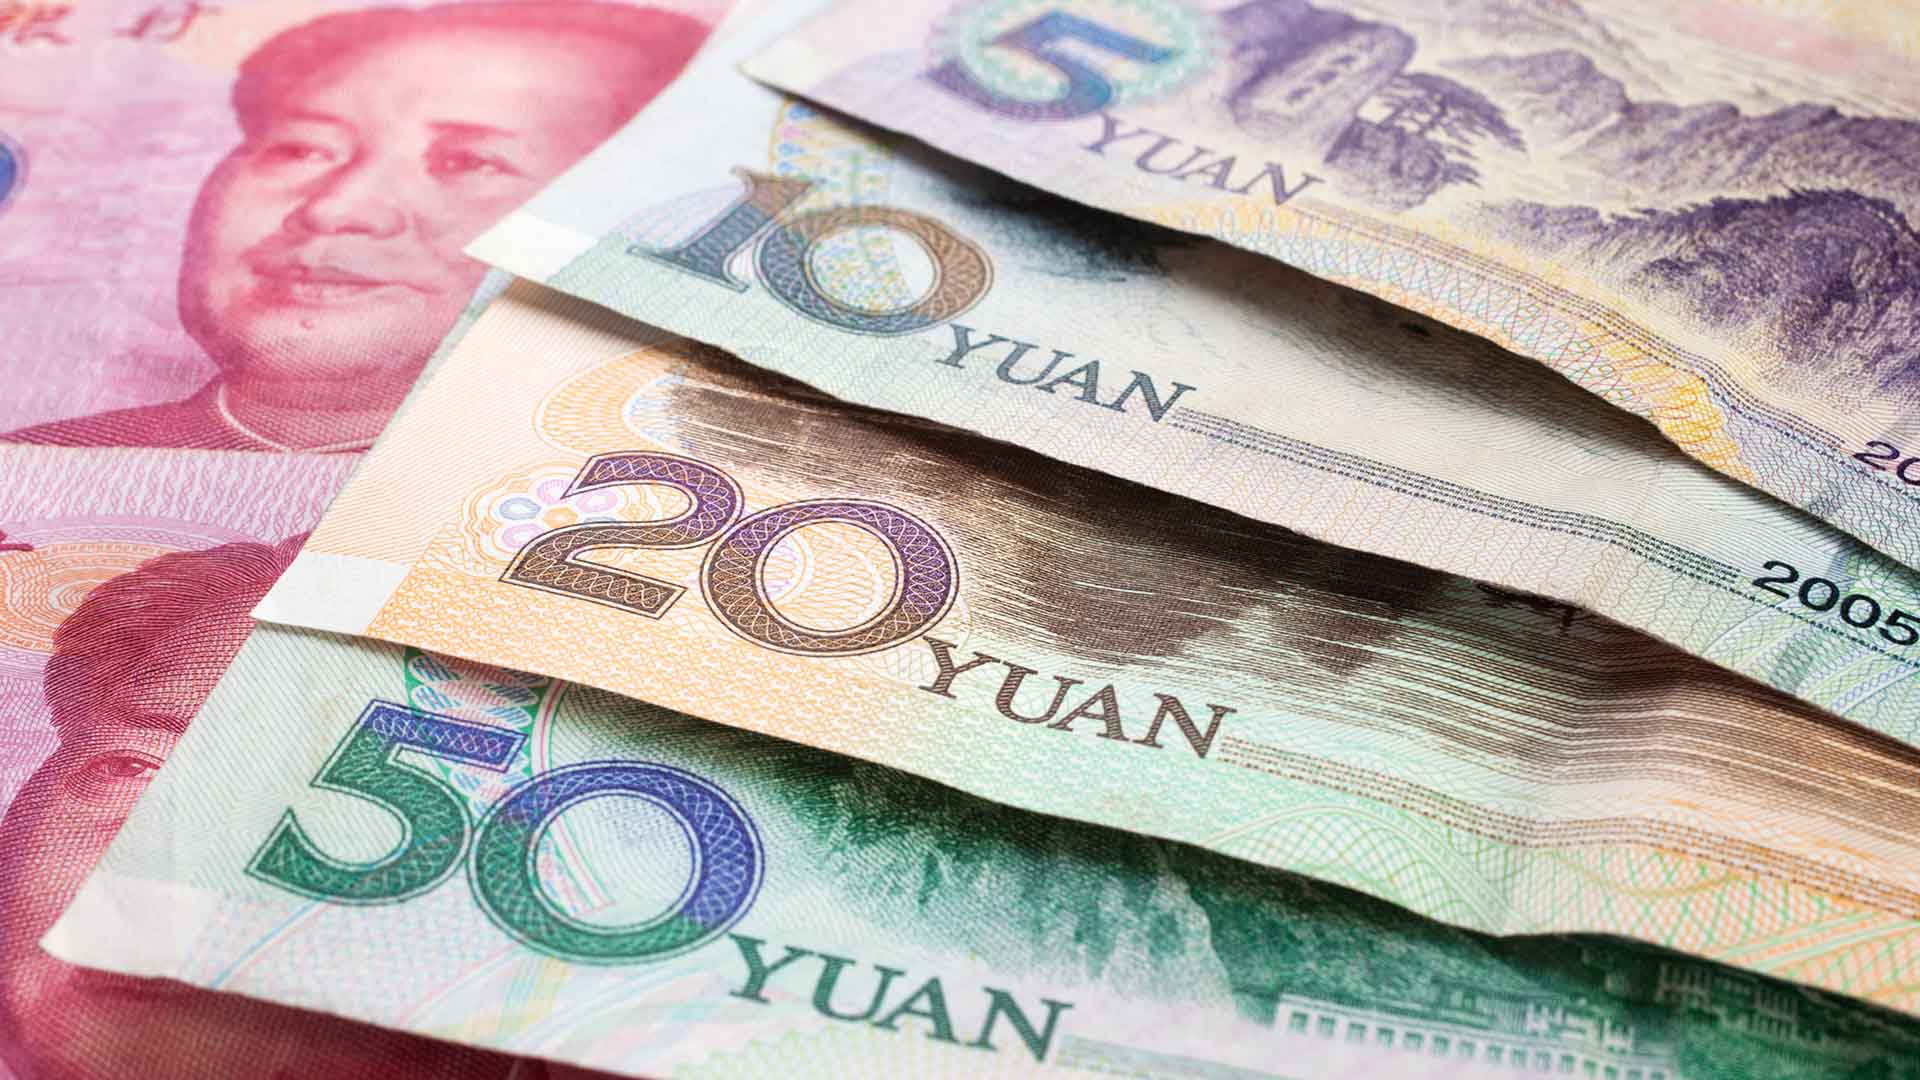 Китай денежная единица. Китай юань. Валюта Китая юань. Денежная единица Китая юань. Валюта Китая купюры.